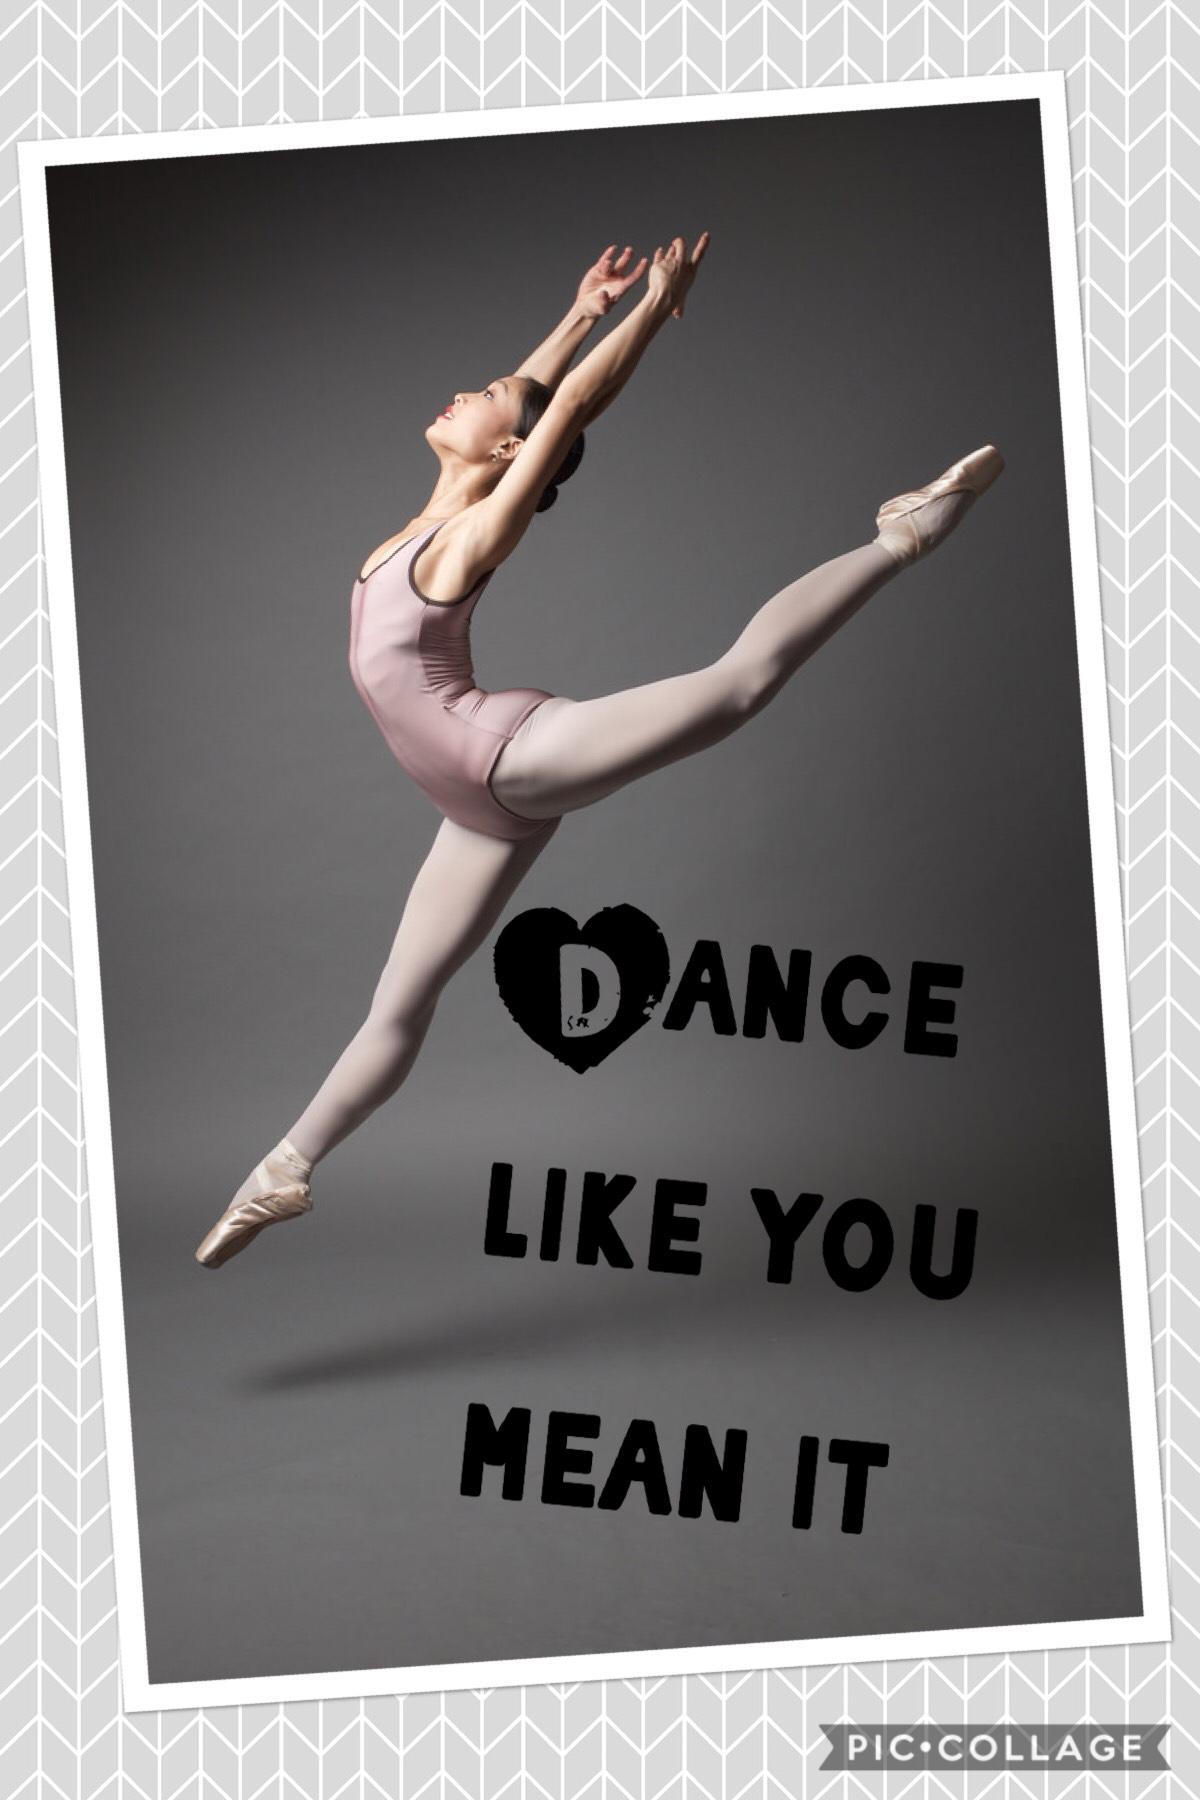 Dance like you mean it
